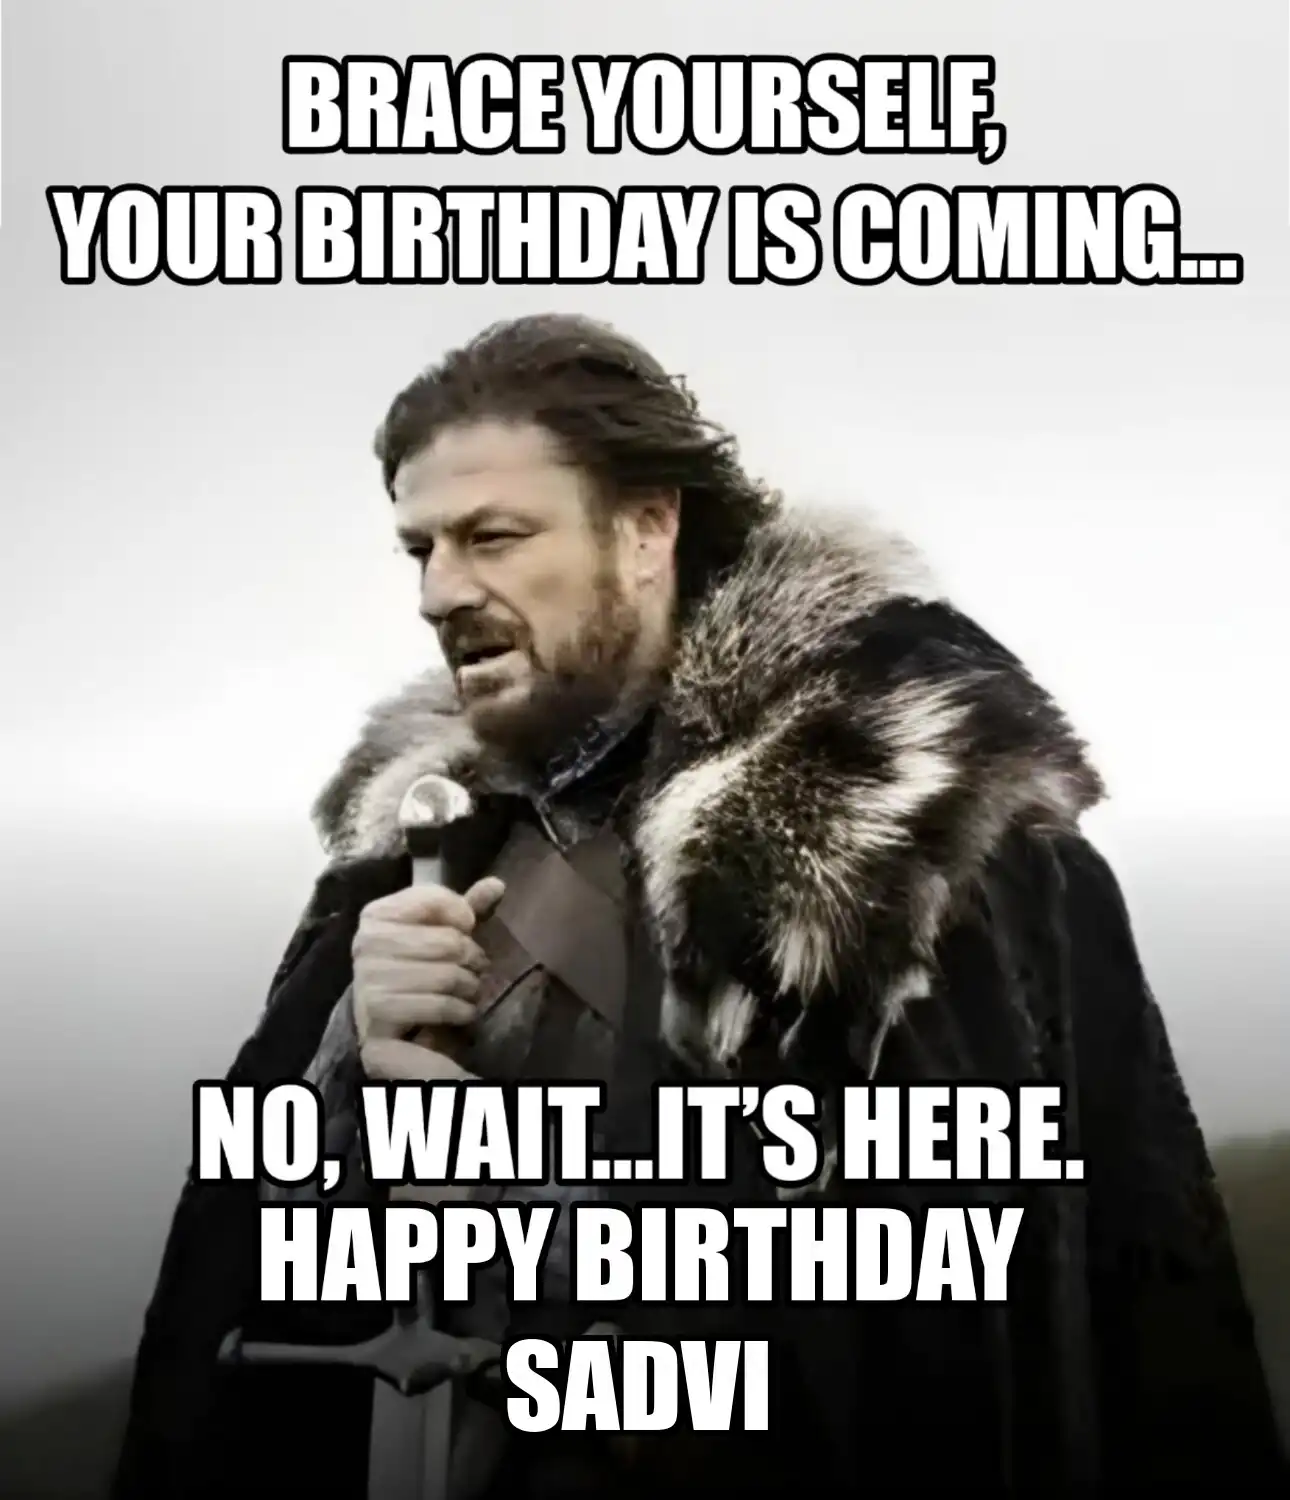 Happy Birthday Sadvi Brace Yourself Your Birthday Is Coming Meme